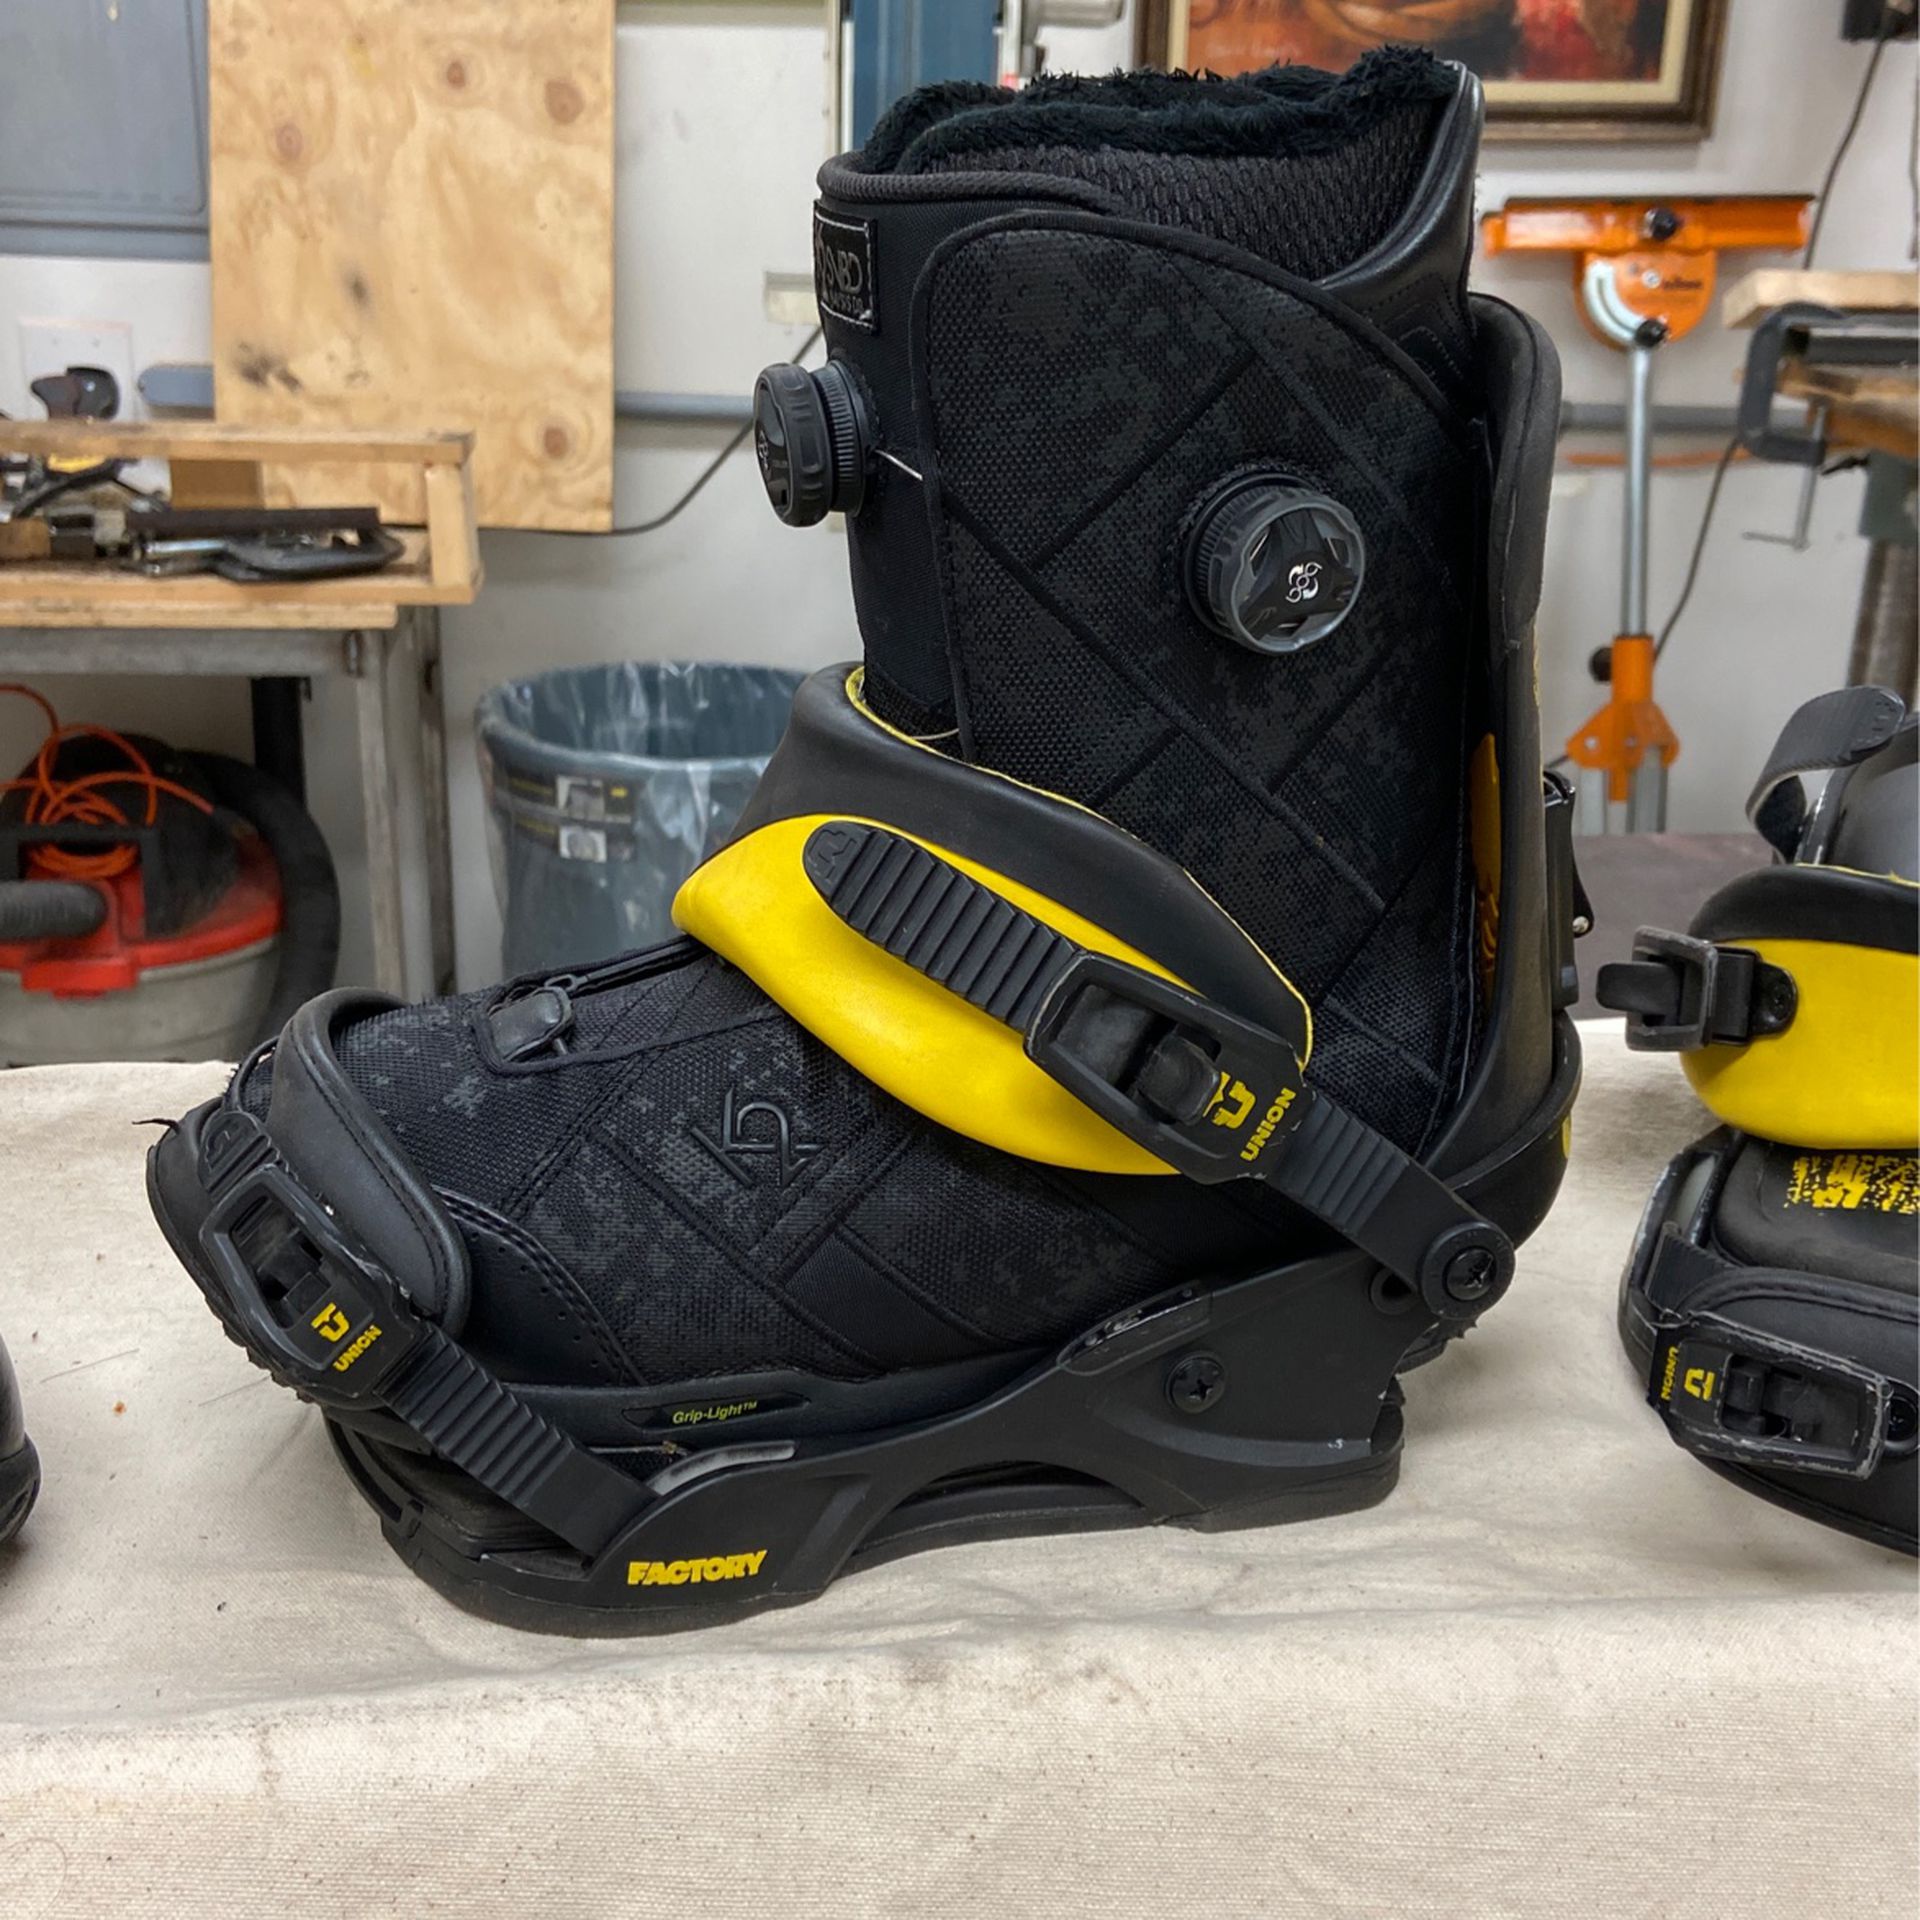 Snowboard Boots And Bindings -K2 Size 11.5 BOA -Union Bindings